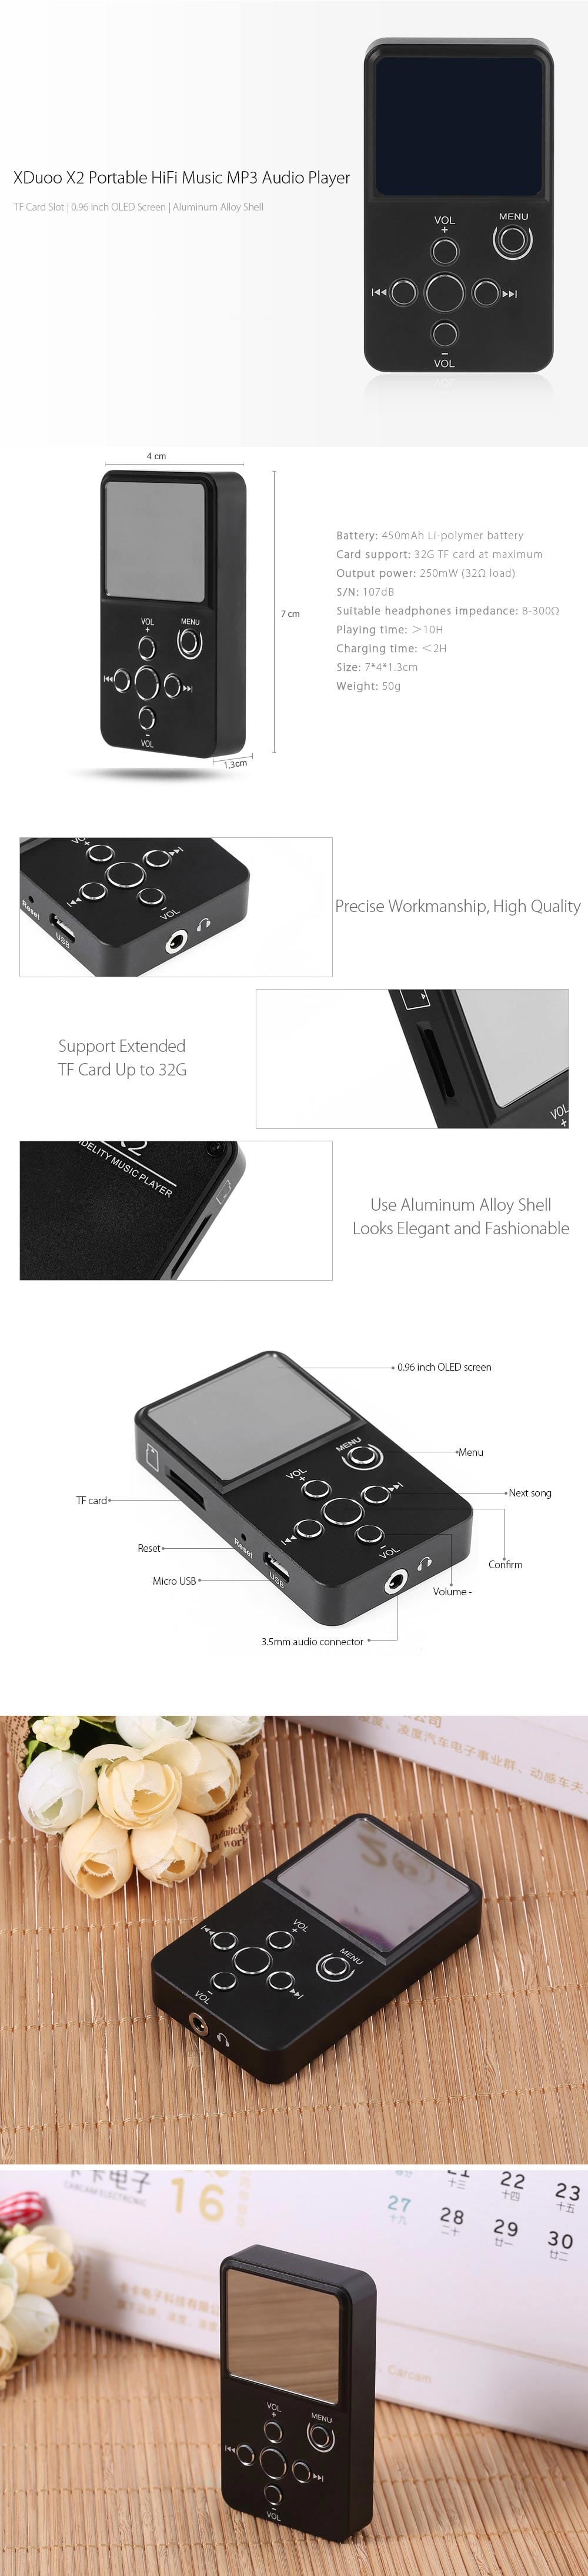 XDuoo X2 HiFi Digital Audio Player MP3 with OLED Screen TF Card Slot Aluminum Alloy Housing- Black